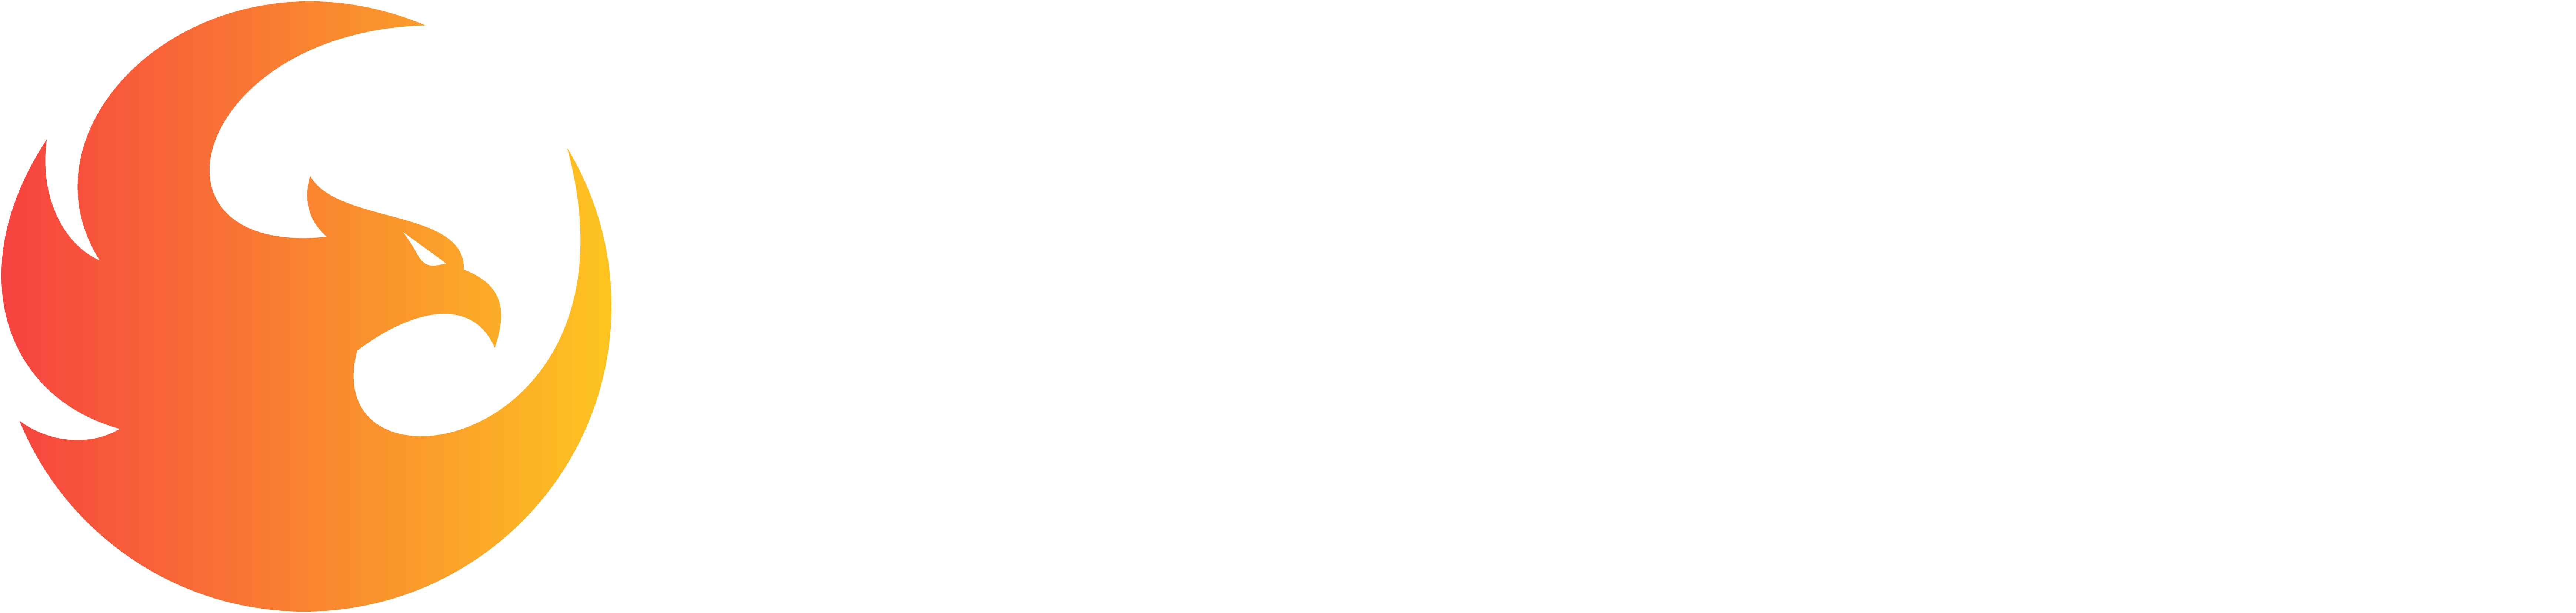 Logo Dropshipping Reborn